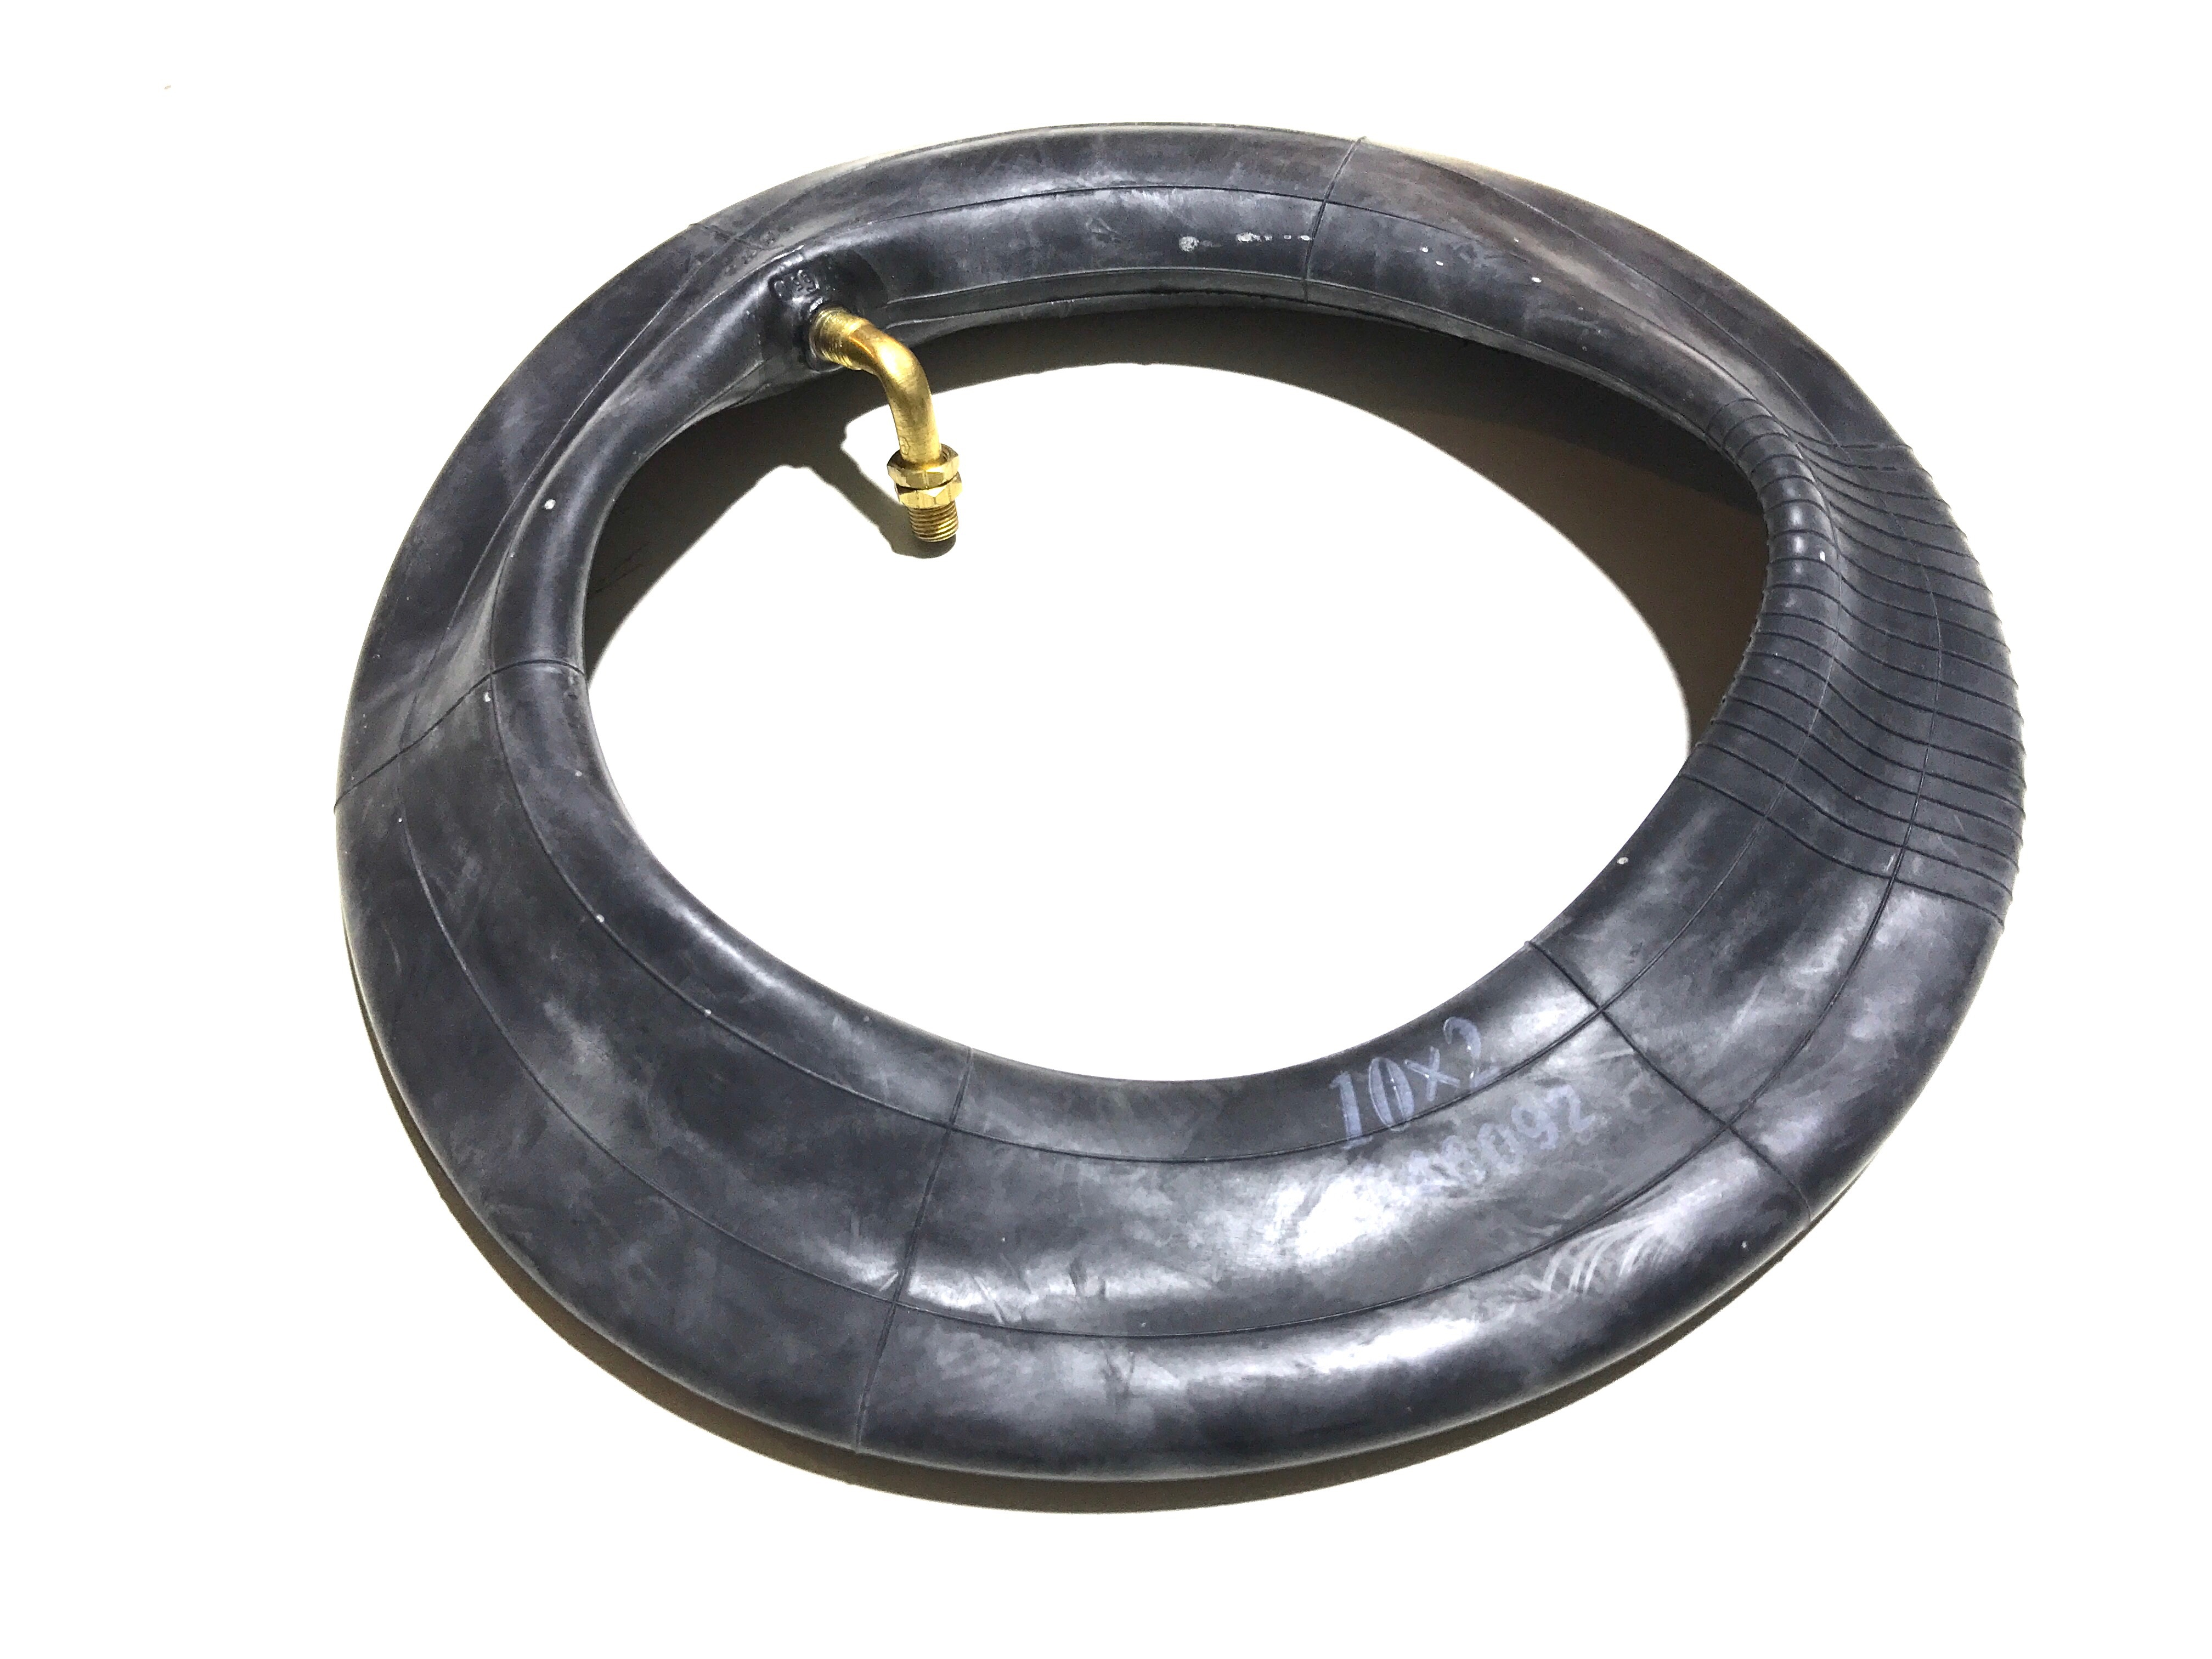 CST 10x2 inner tube with bent valve